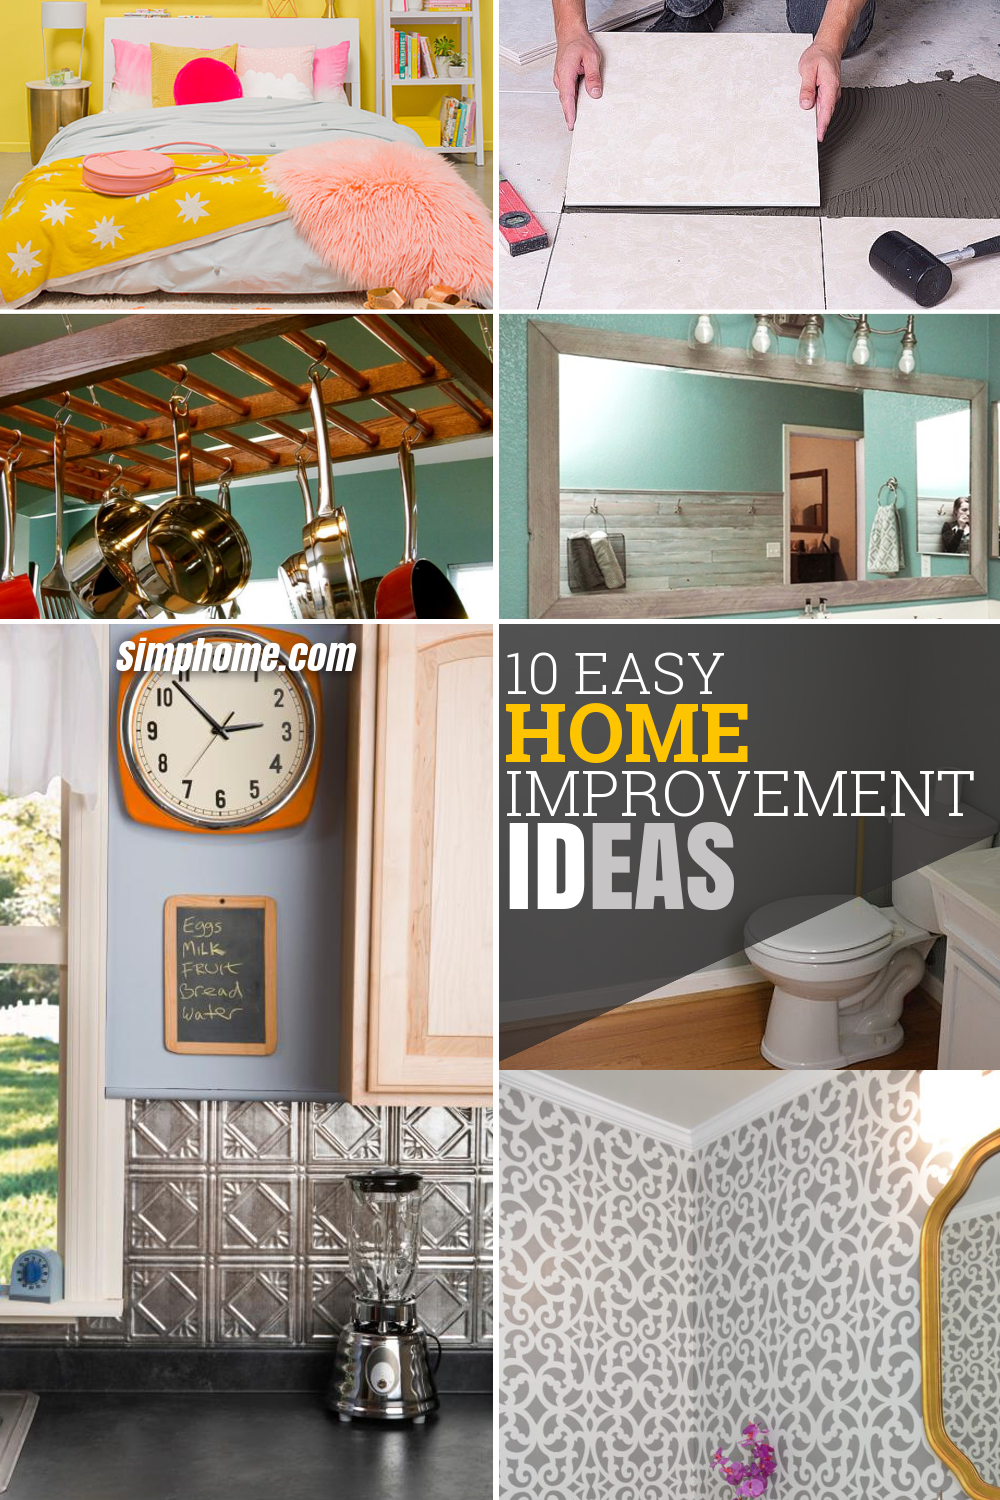 Easy Home Improvement Ideas Via Simphome com pinterest image long